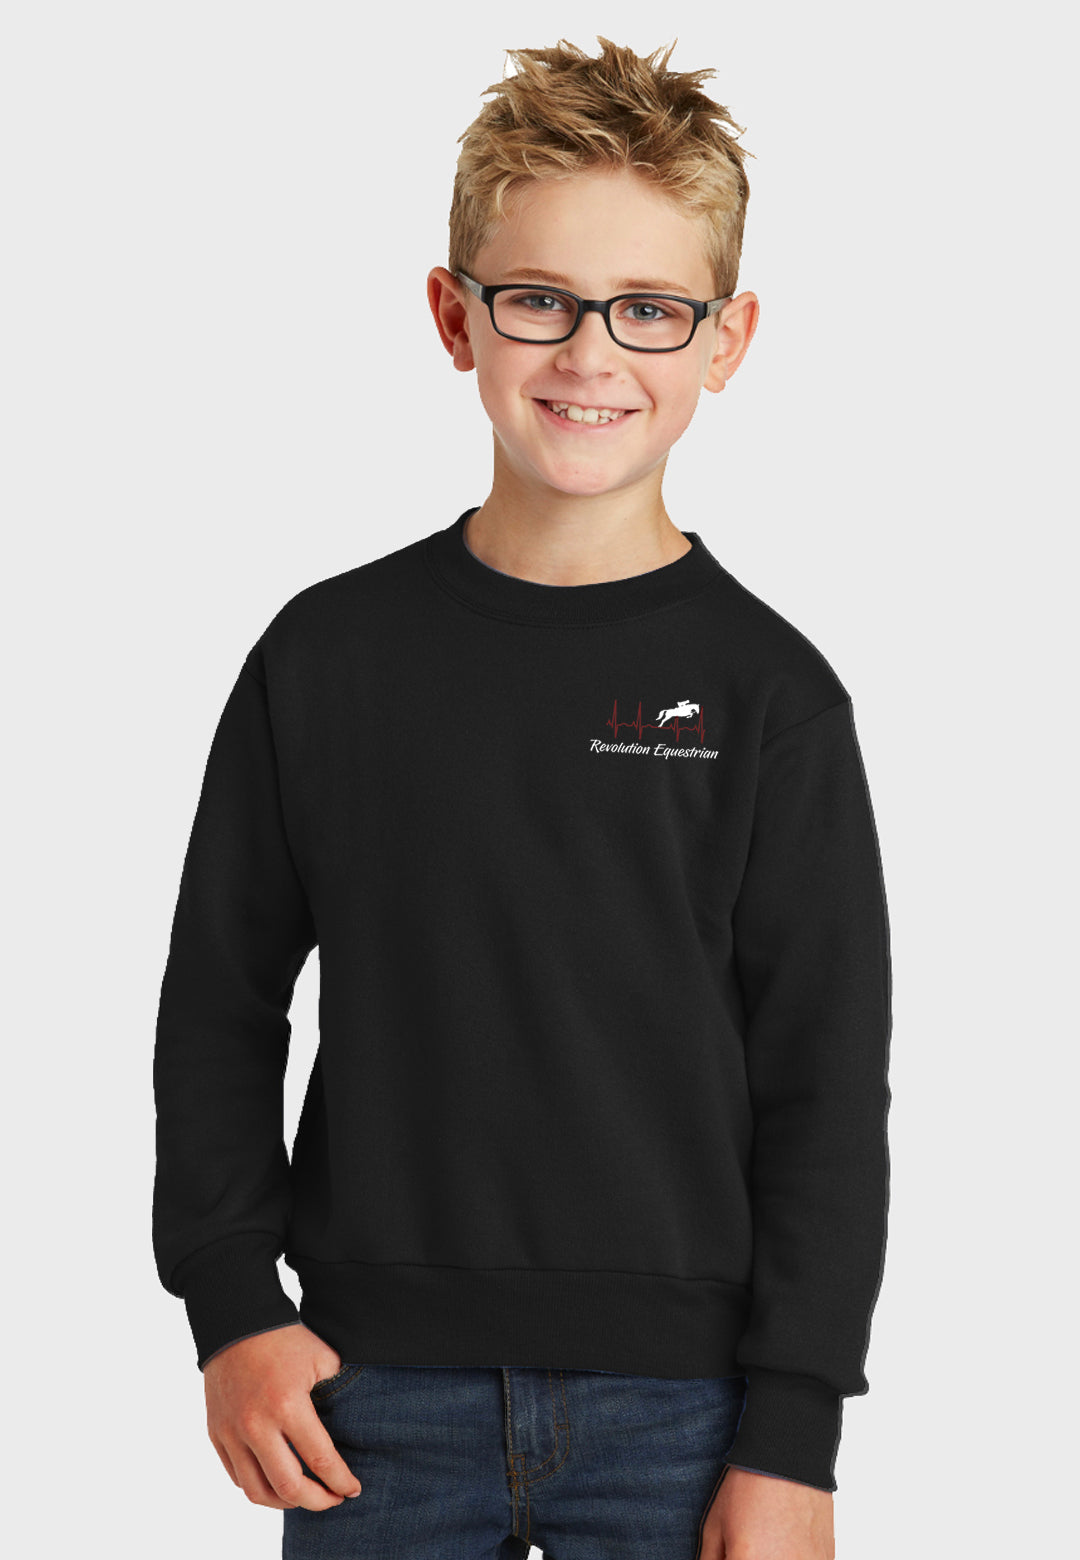 Revolution Equestrian Port & Company® Essential Fleece Crewneck Sweatshirt - Adult (unisex)/Youth Sizes, 3 Color Options